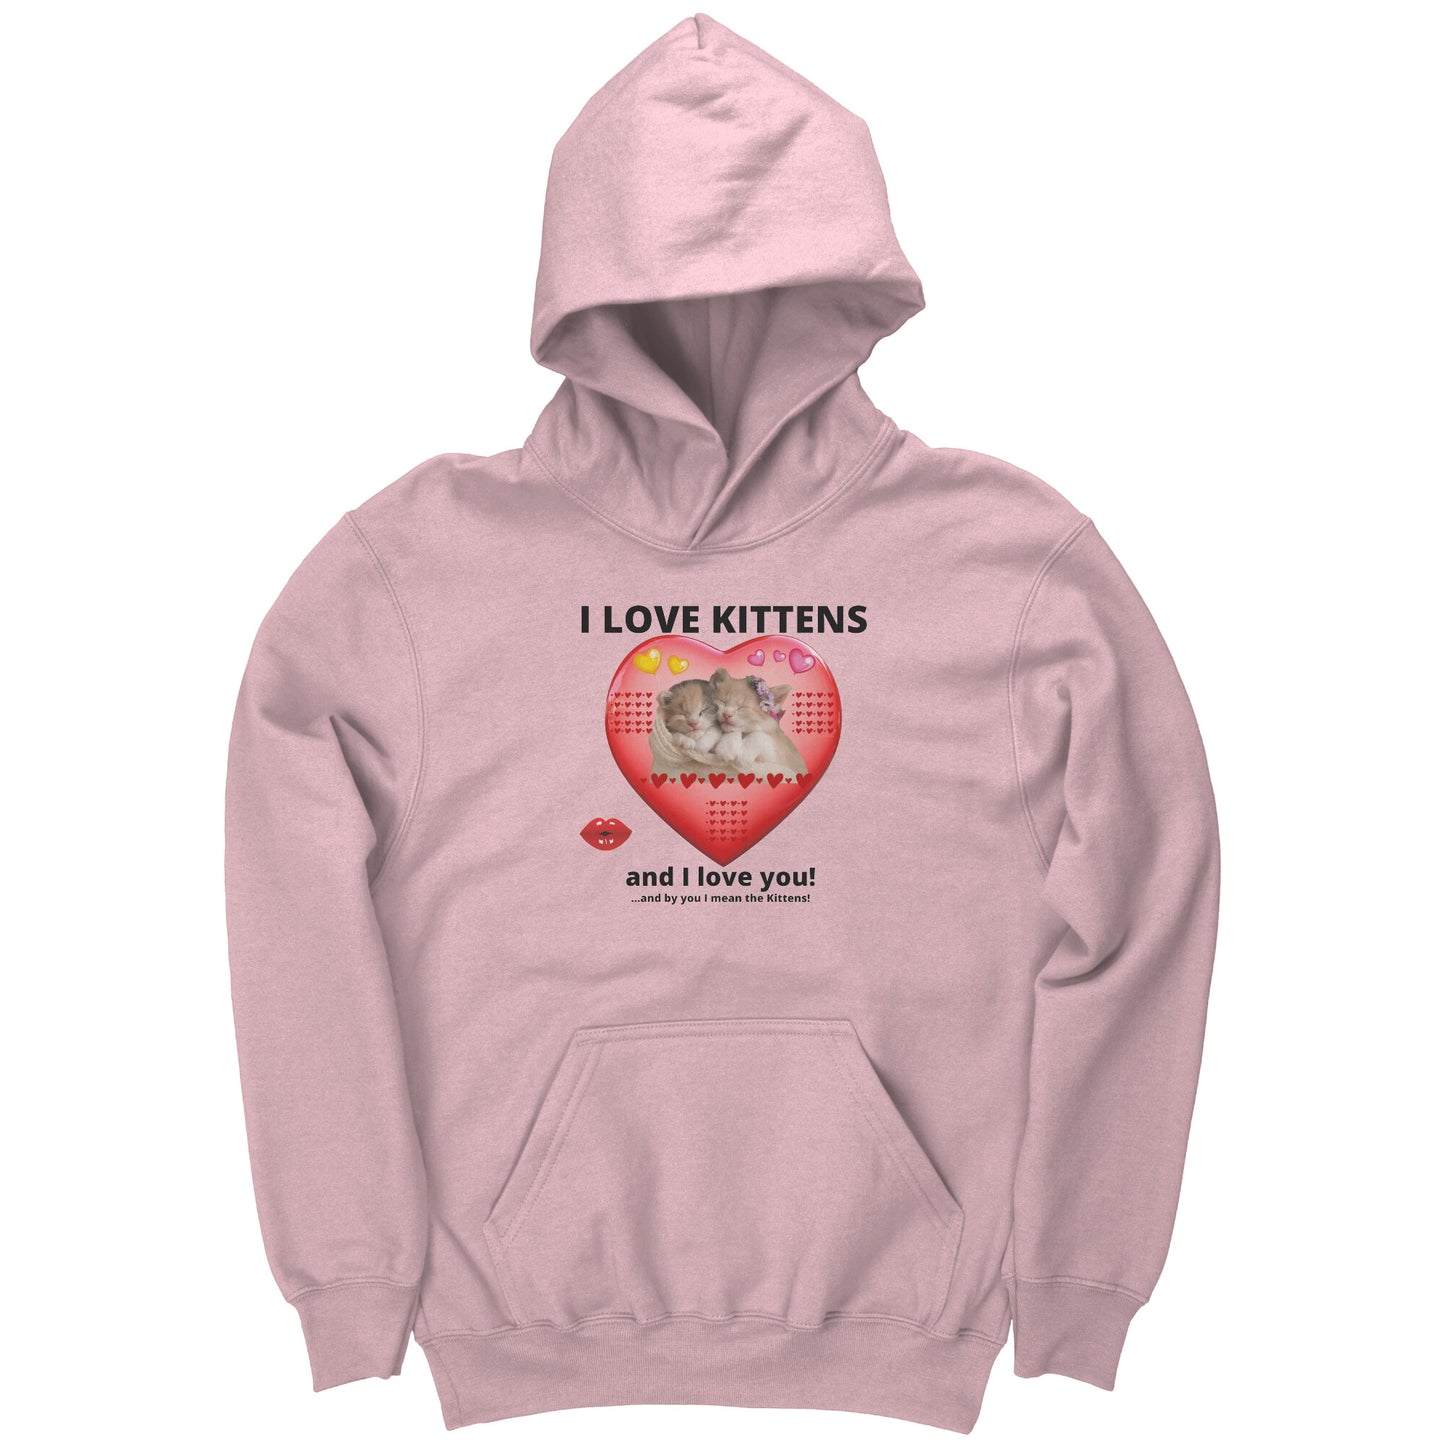 Pink Sweatshirt with I Love Kittens image